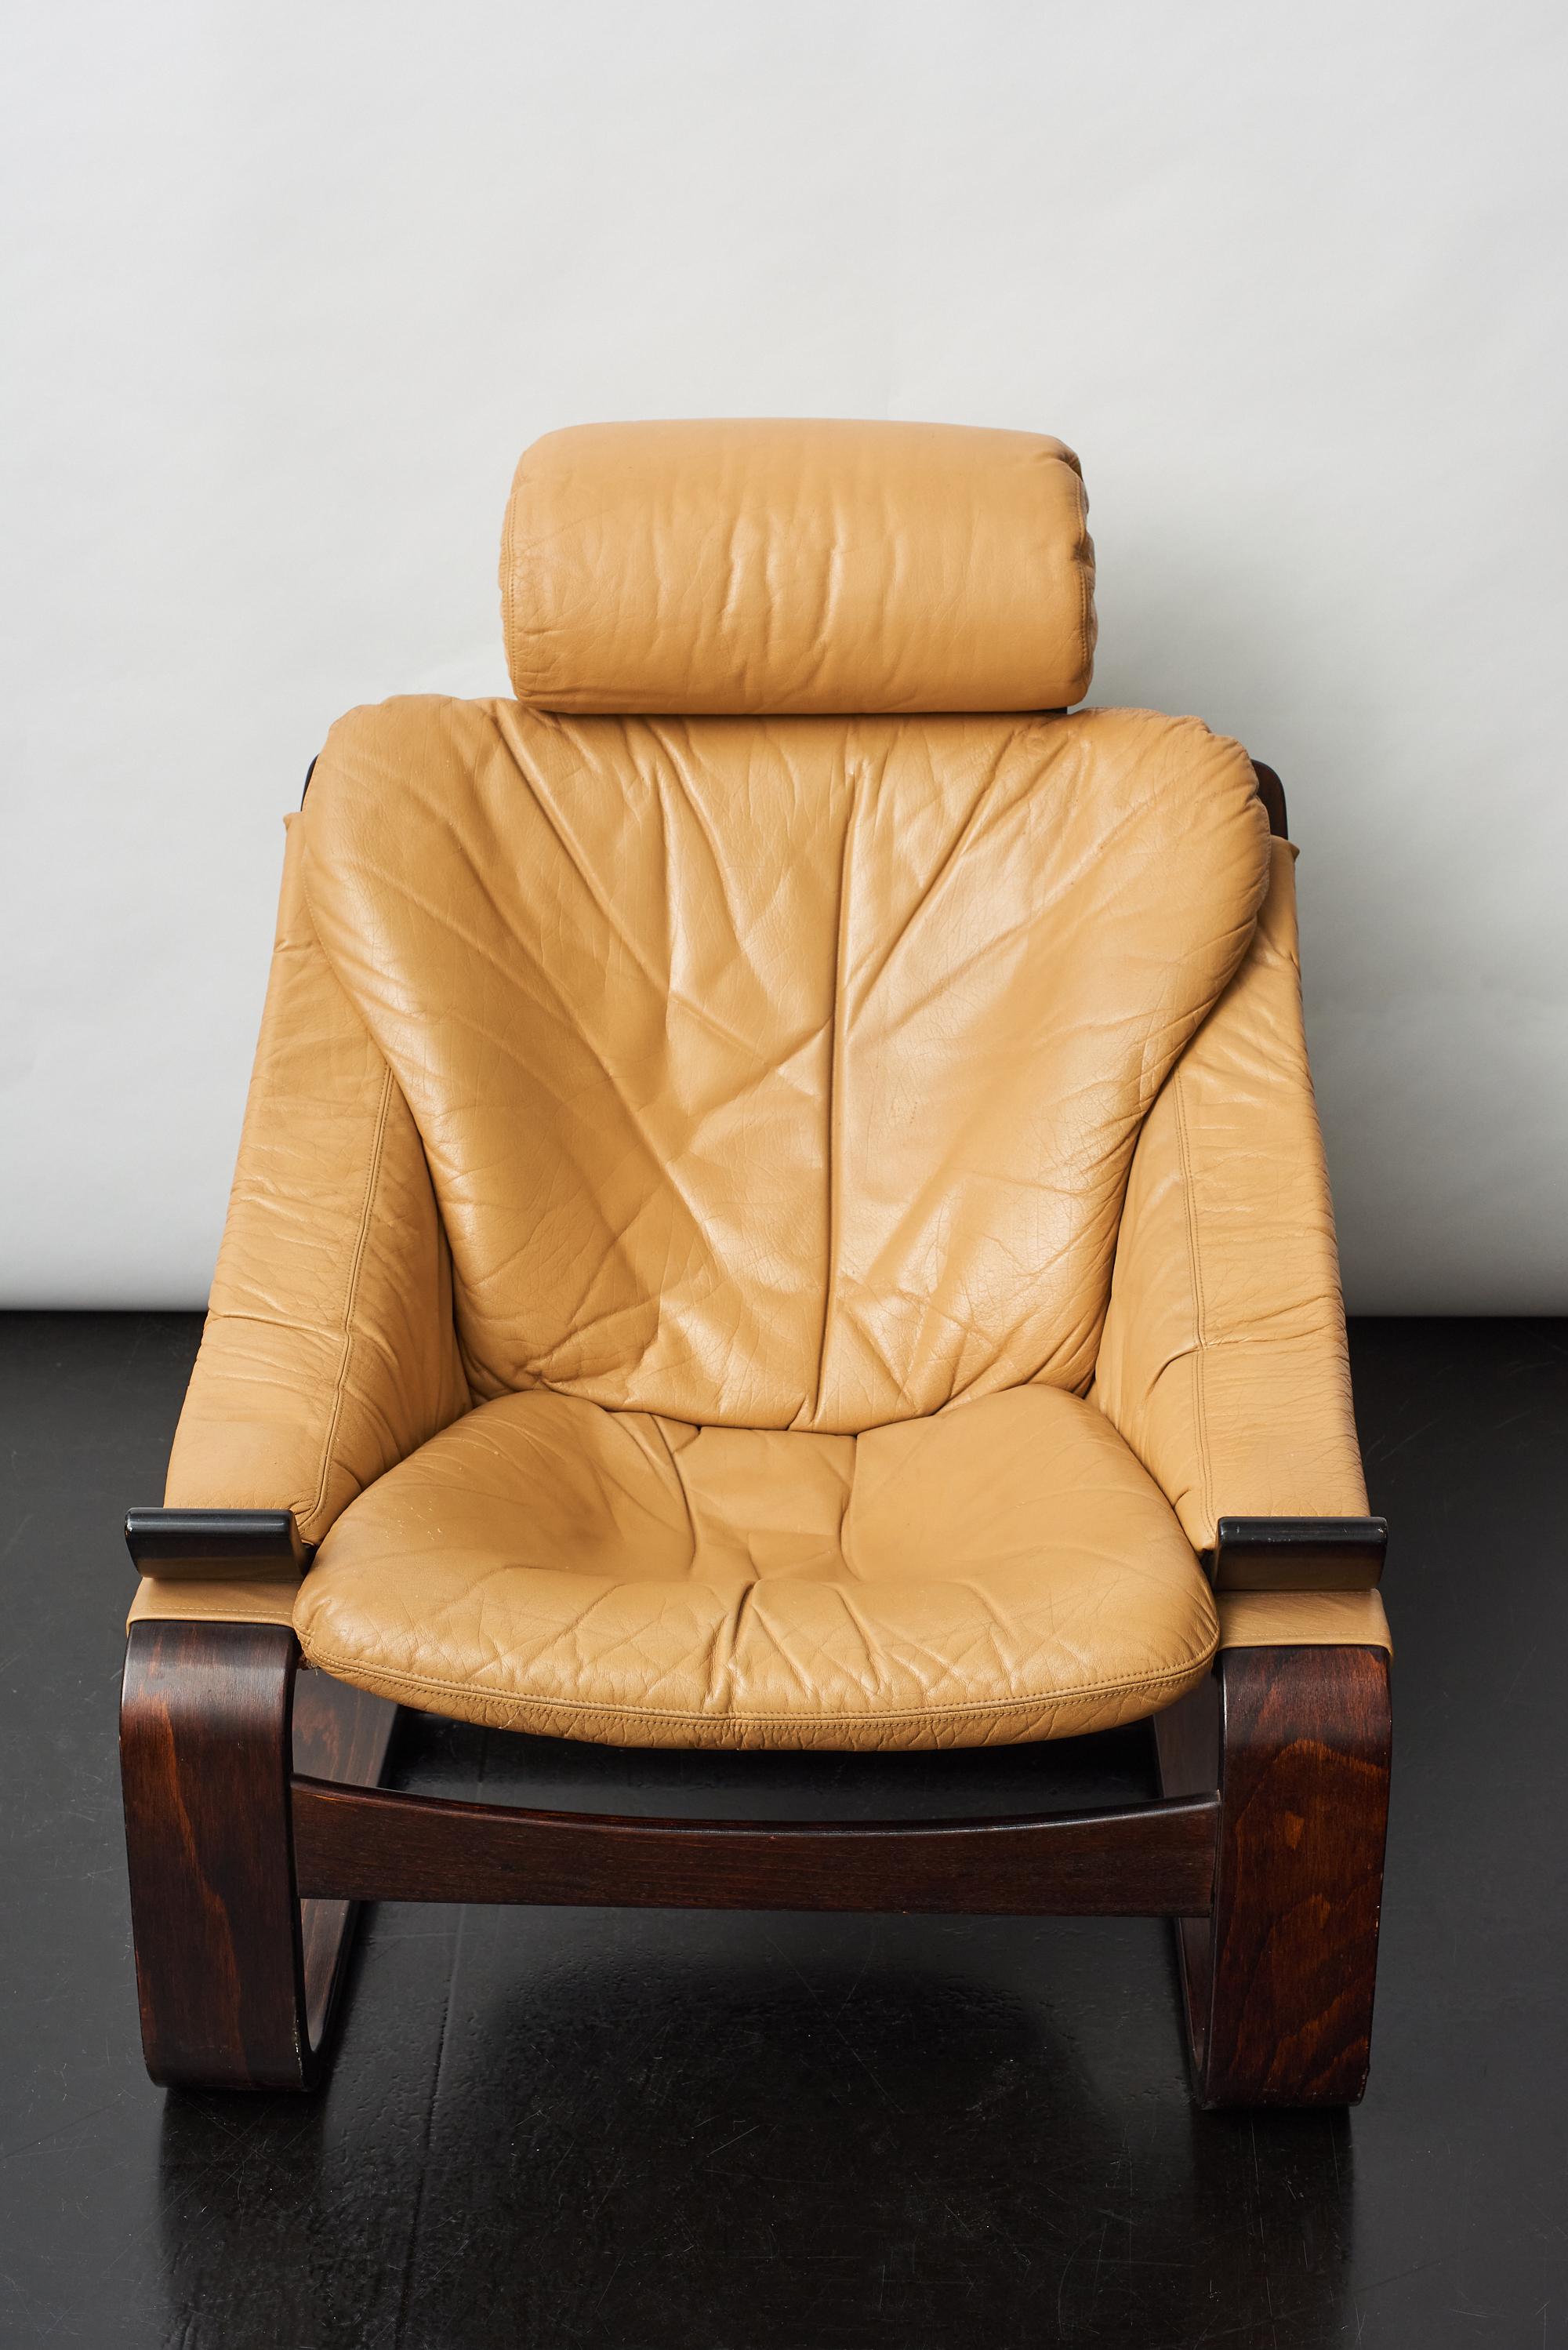 Scandinavian Modern Leather ‘Kroken’ Lounge Chair Designed by Ake Fribytter, Sweden, 1974